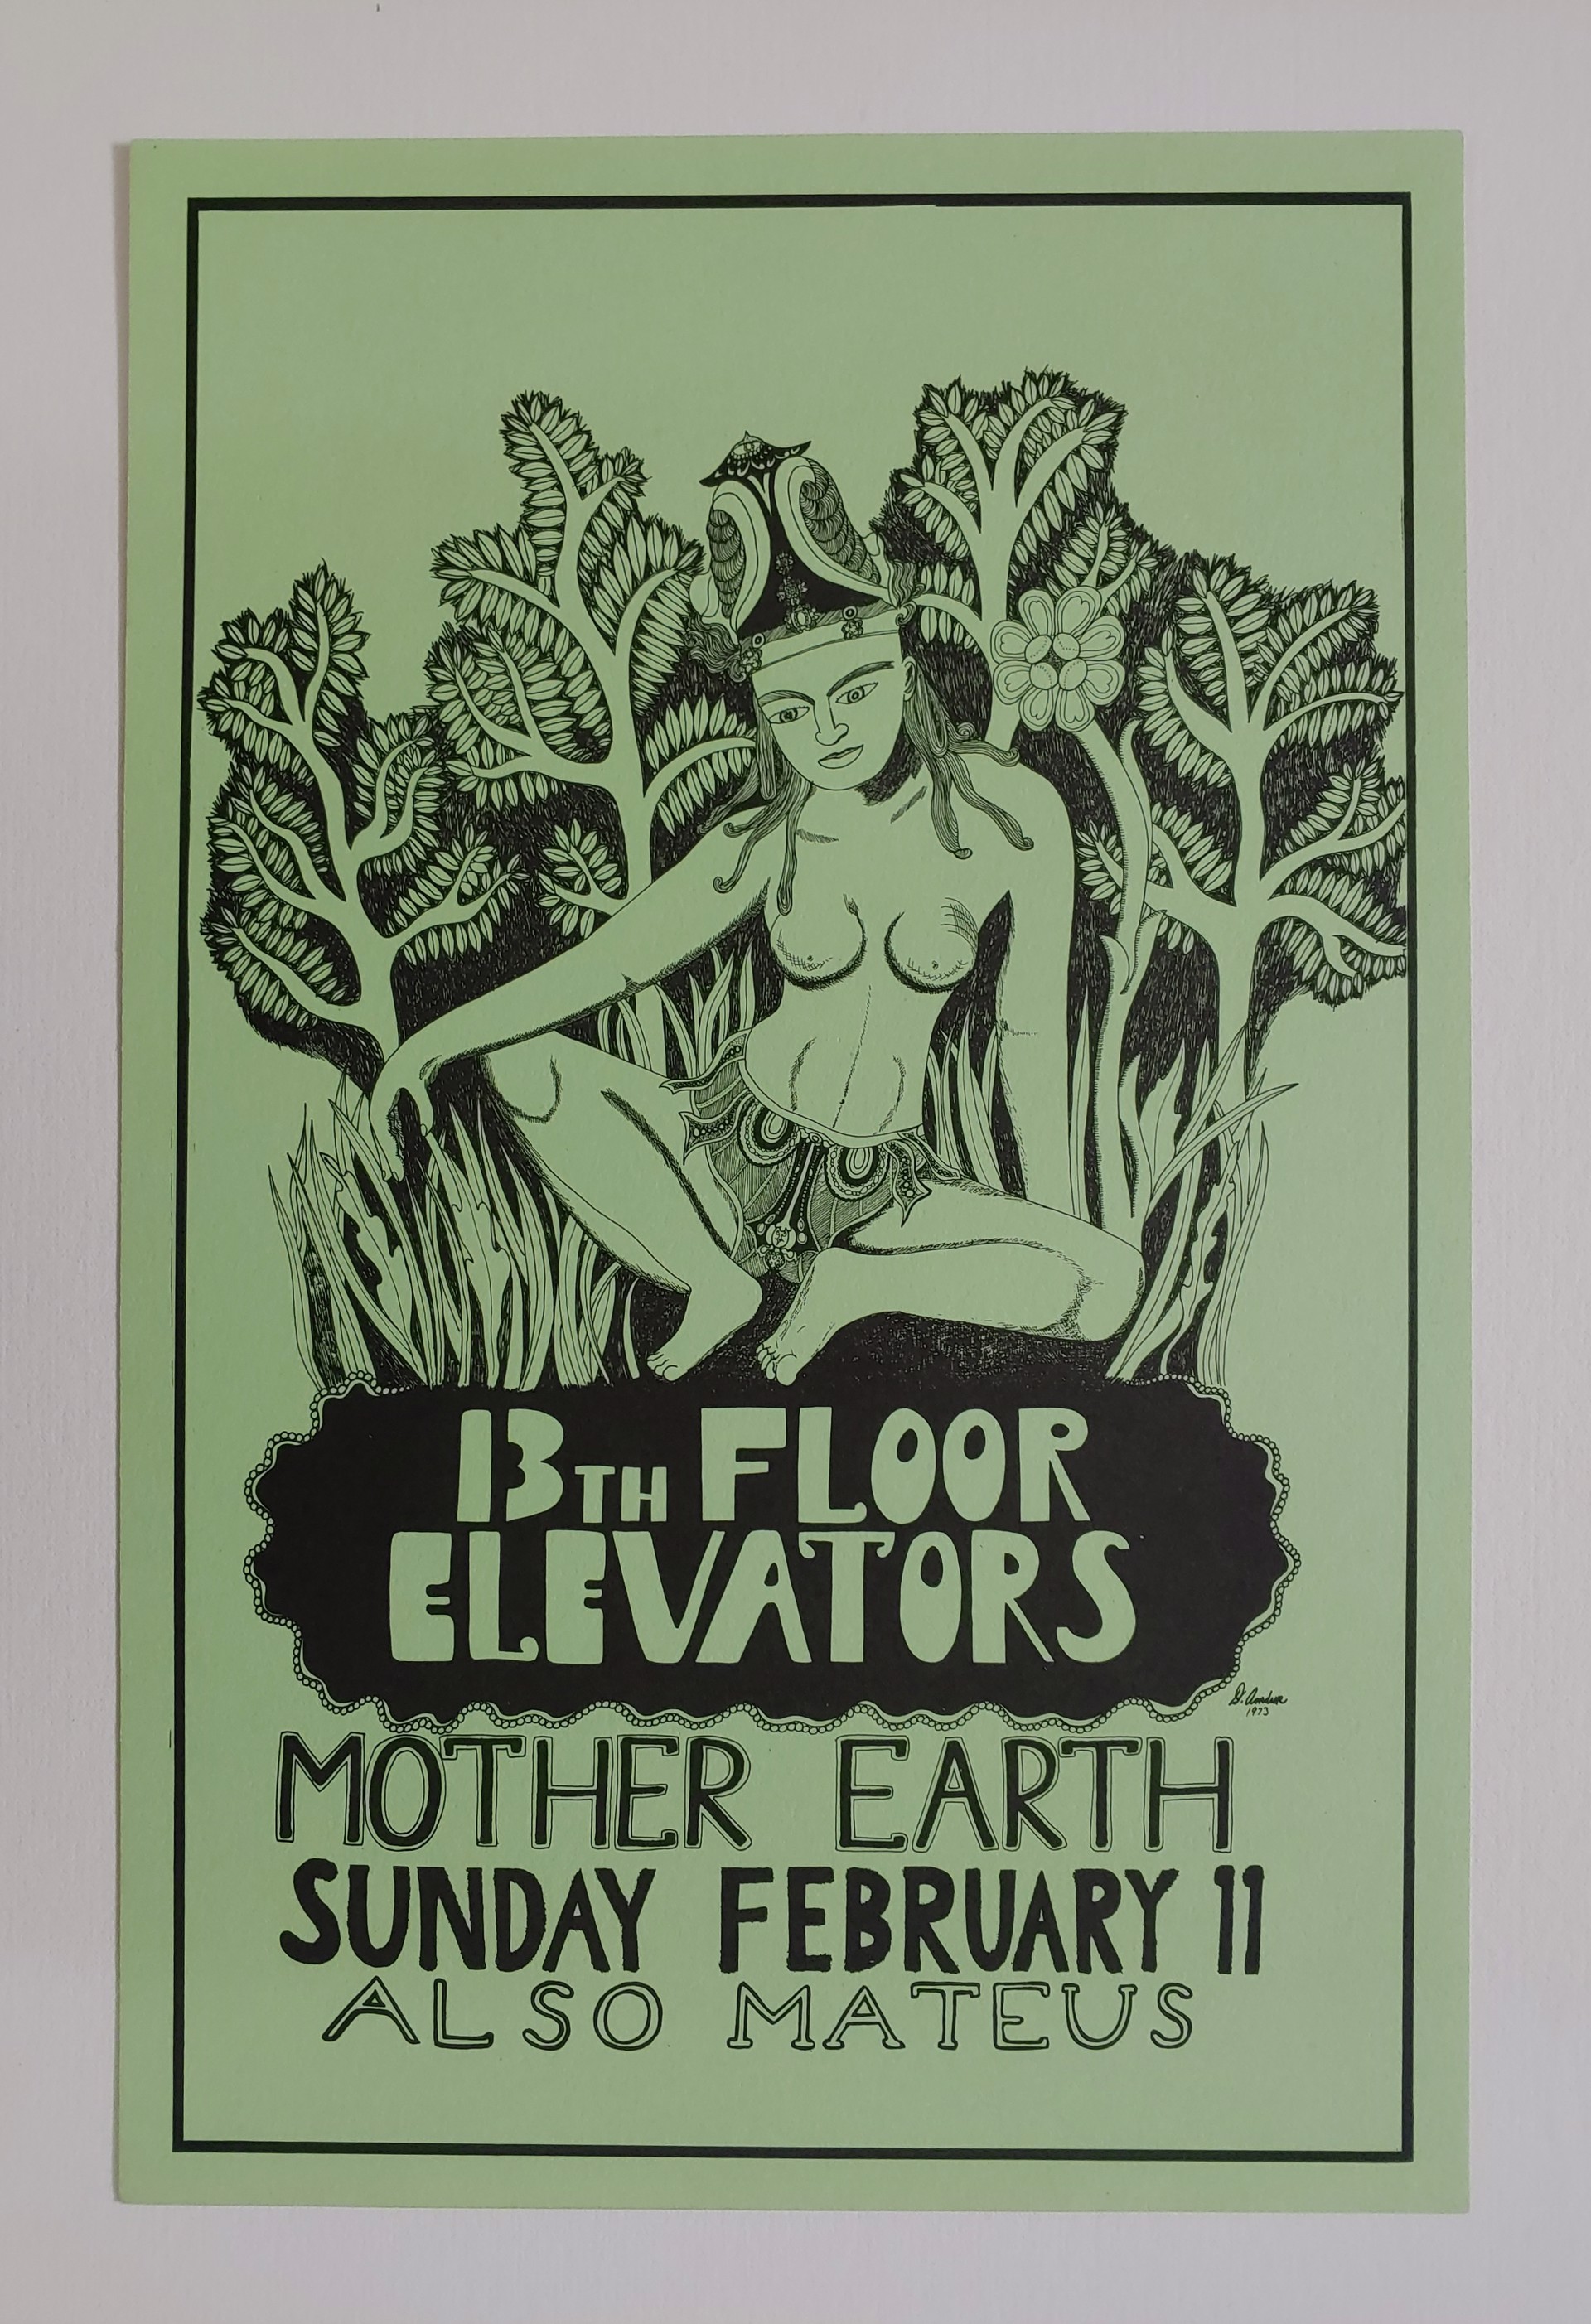 13th Floor Elevator Posters by David Amdur